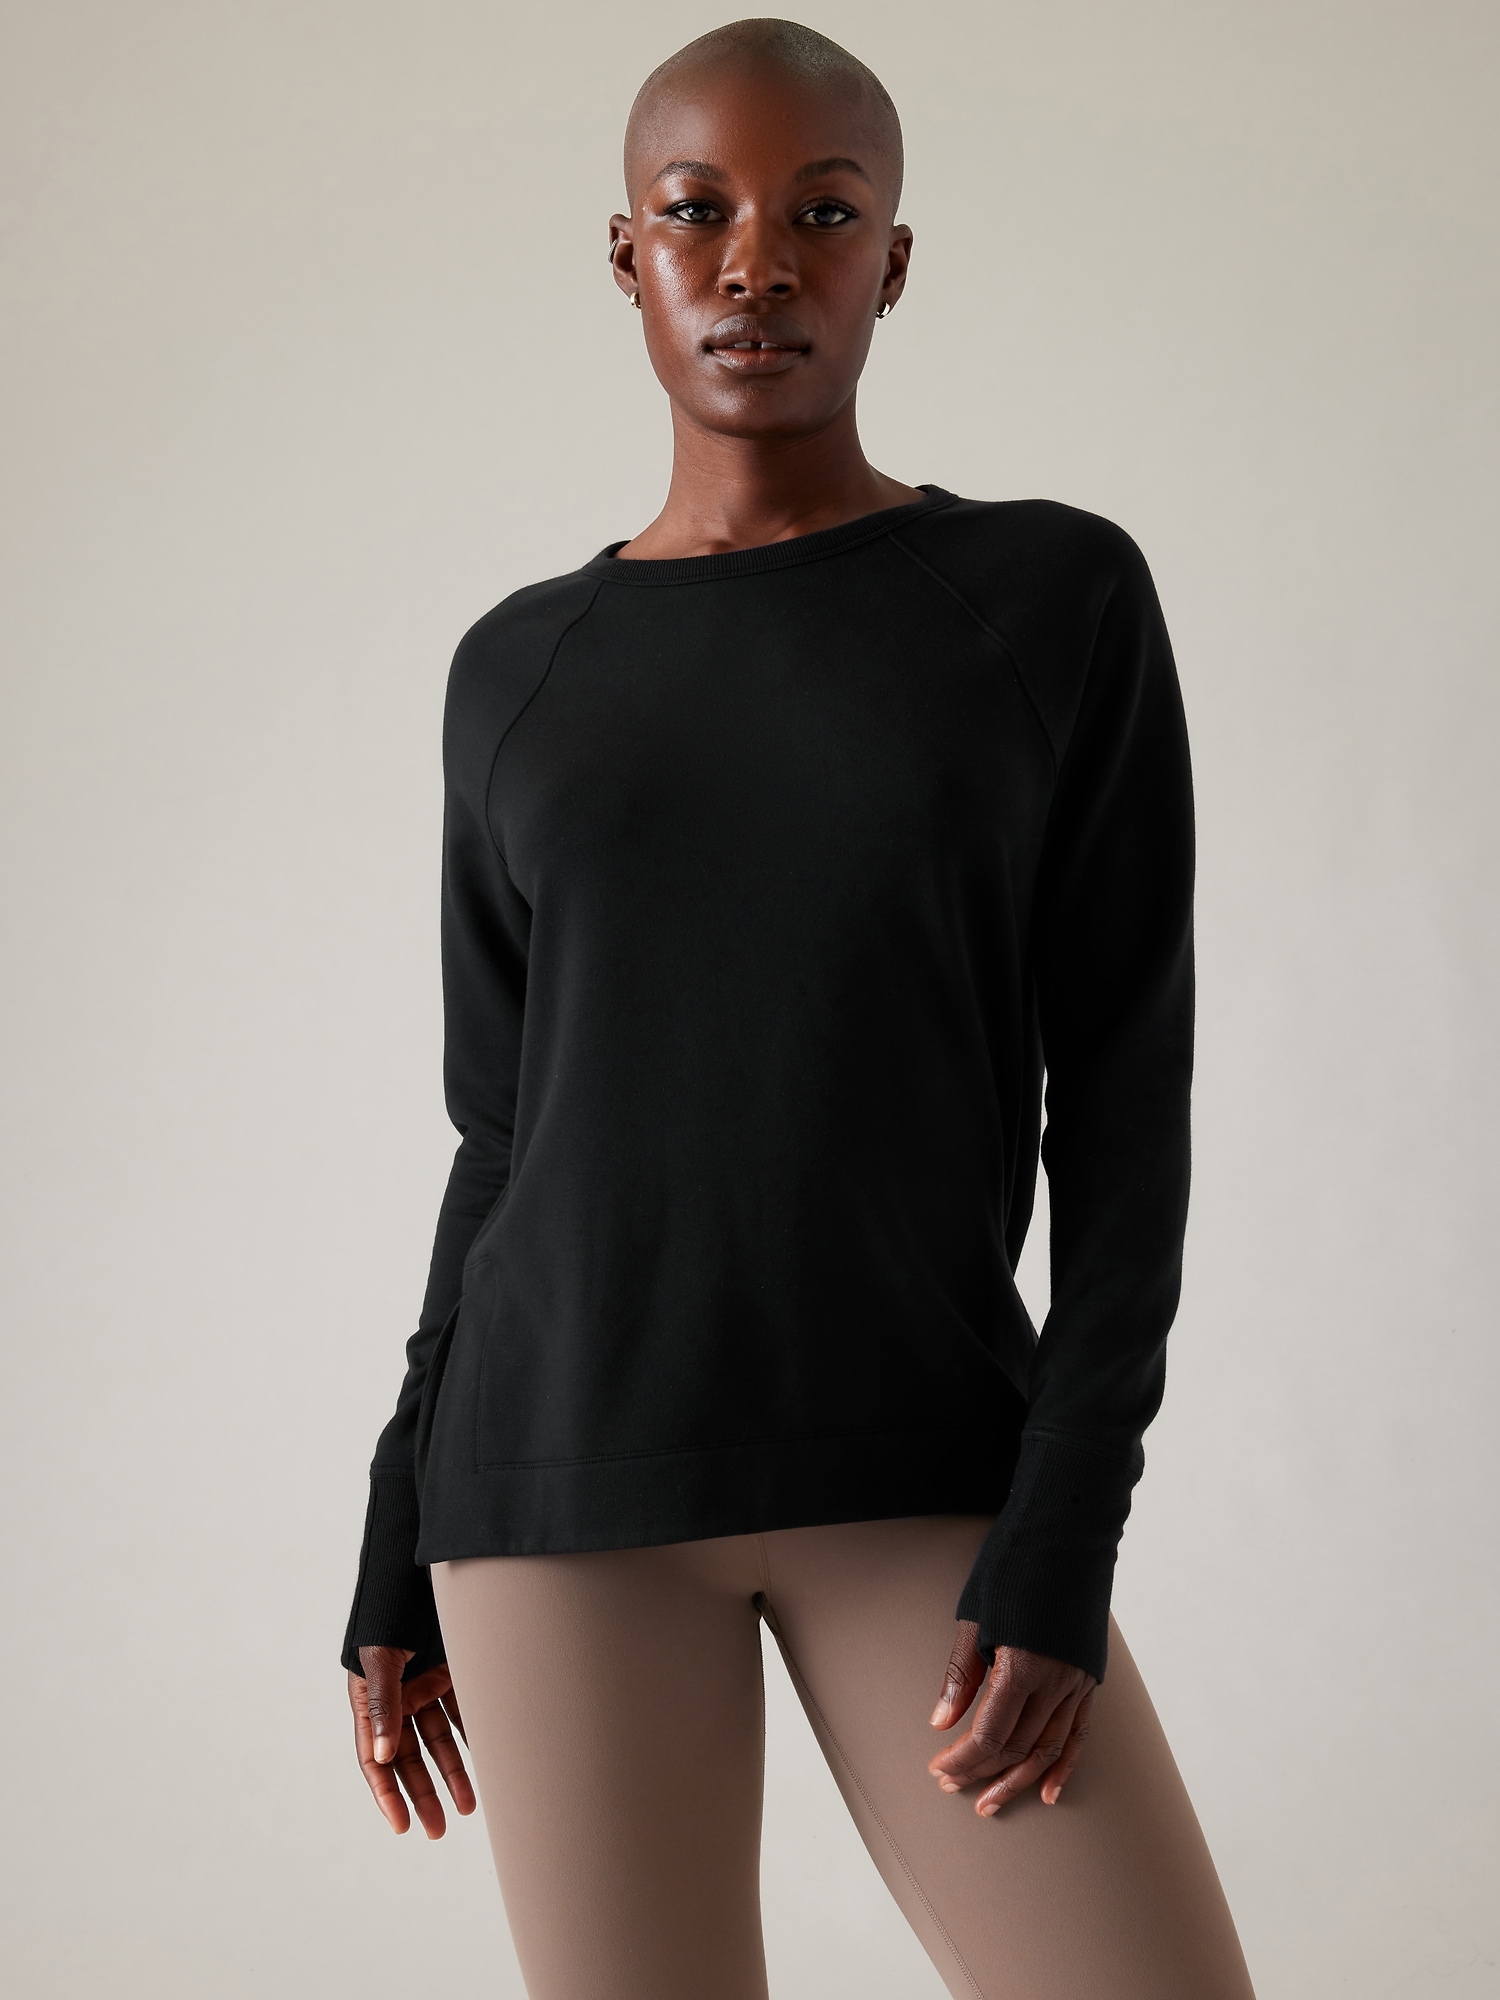 LULULEMON Women's(No Size Tag) Top Long Sleeve Shirt Side Slits Black